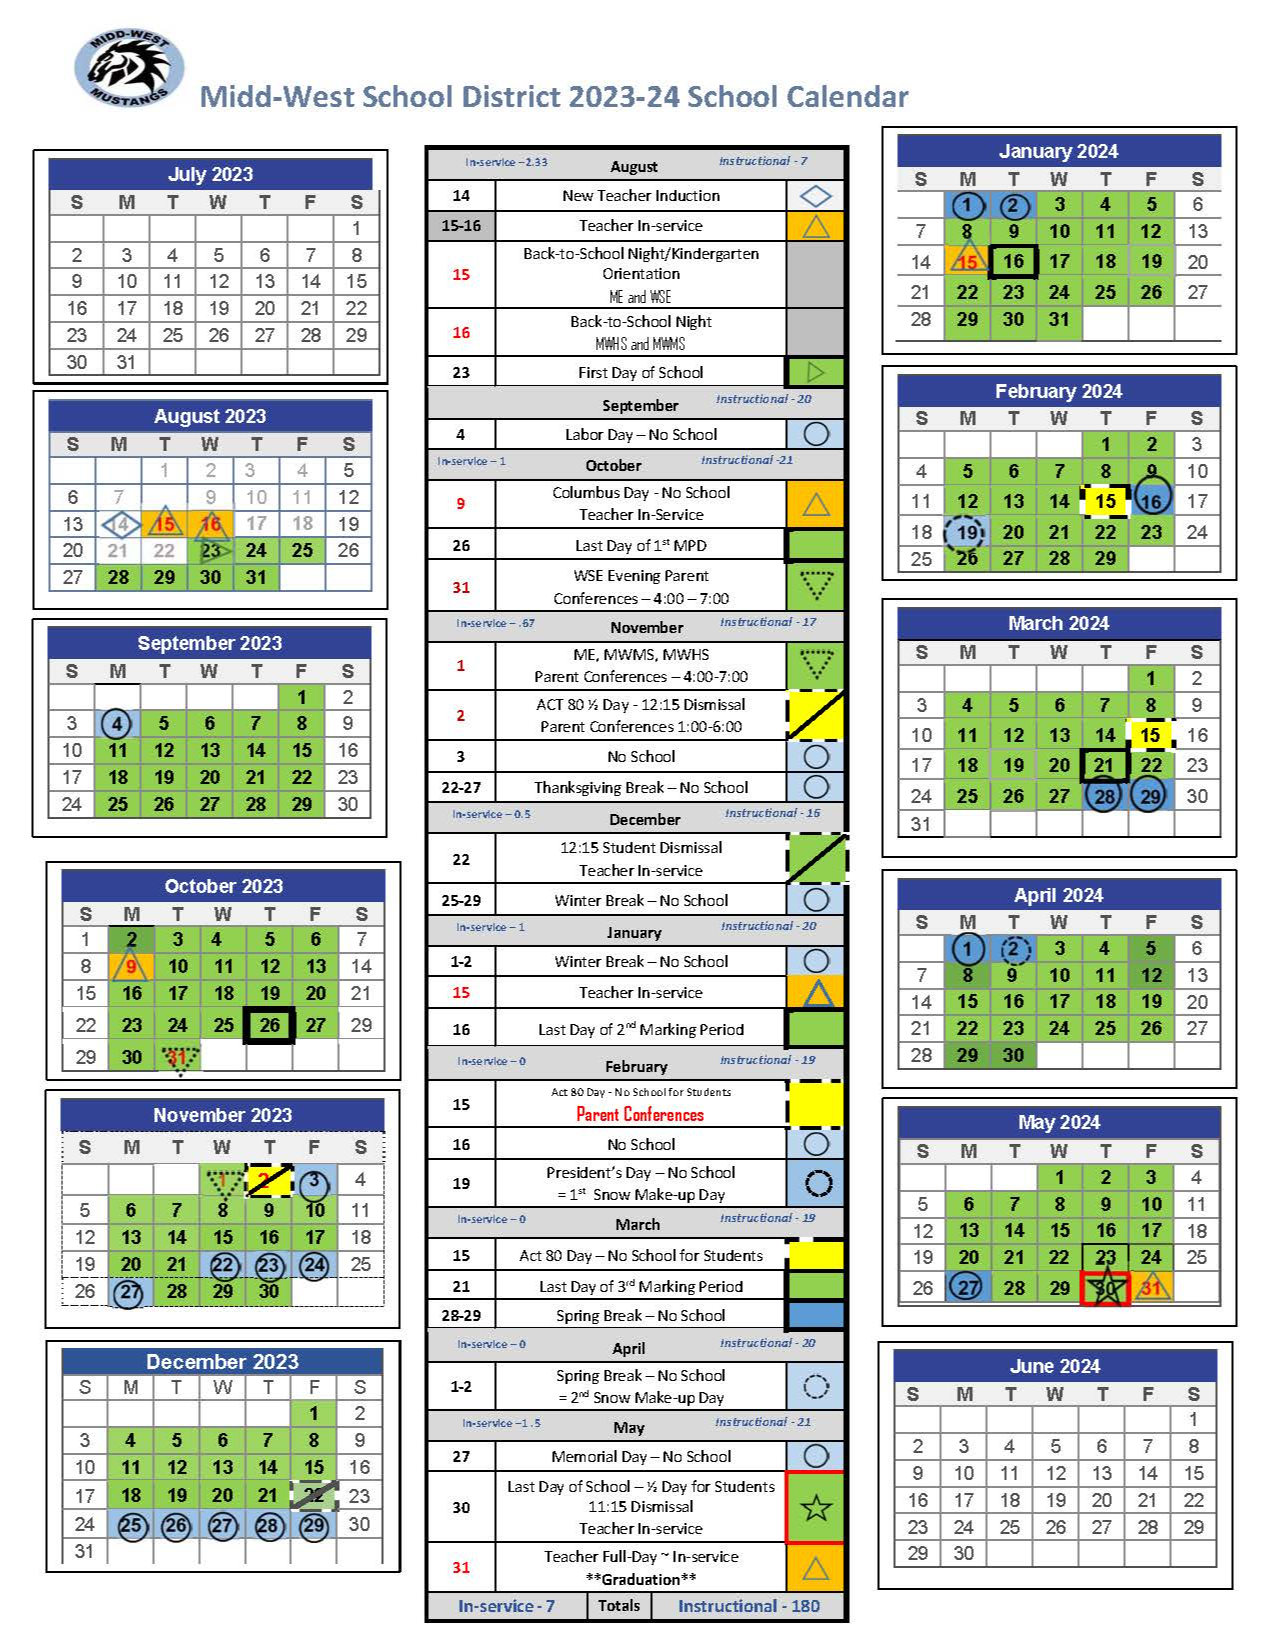 Midd-West School District Calendar 2023 and 2024 - PublicHolidays.com